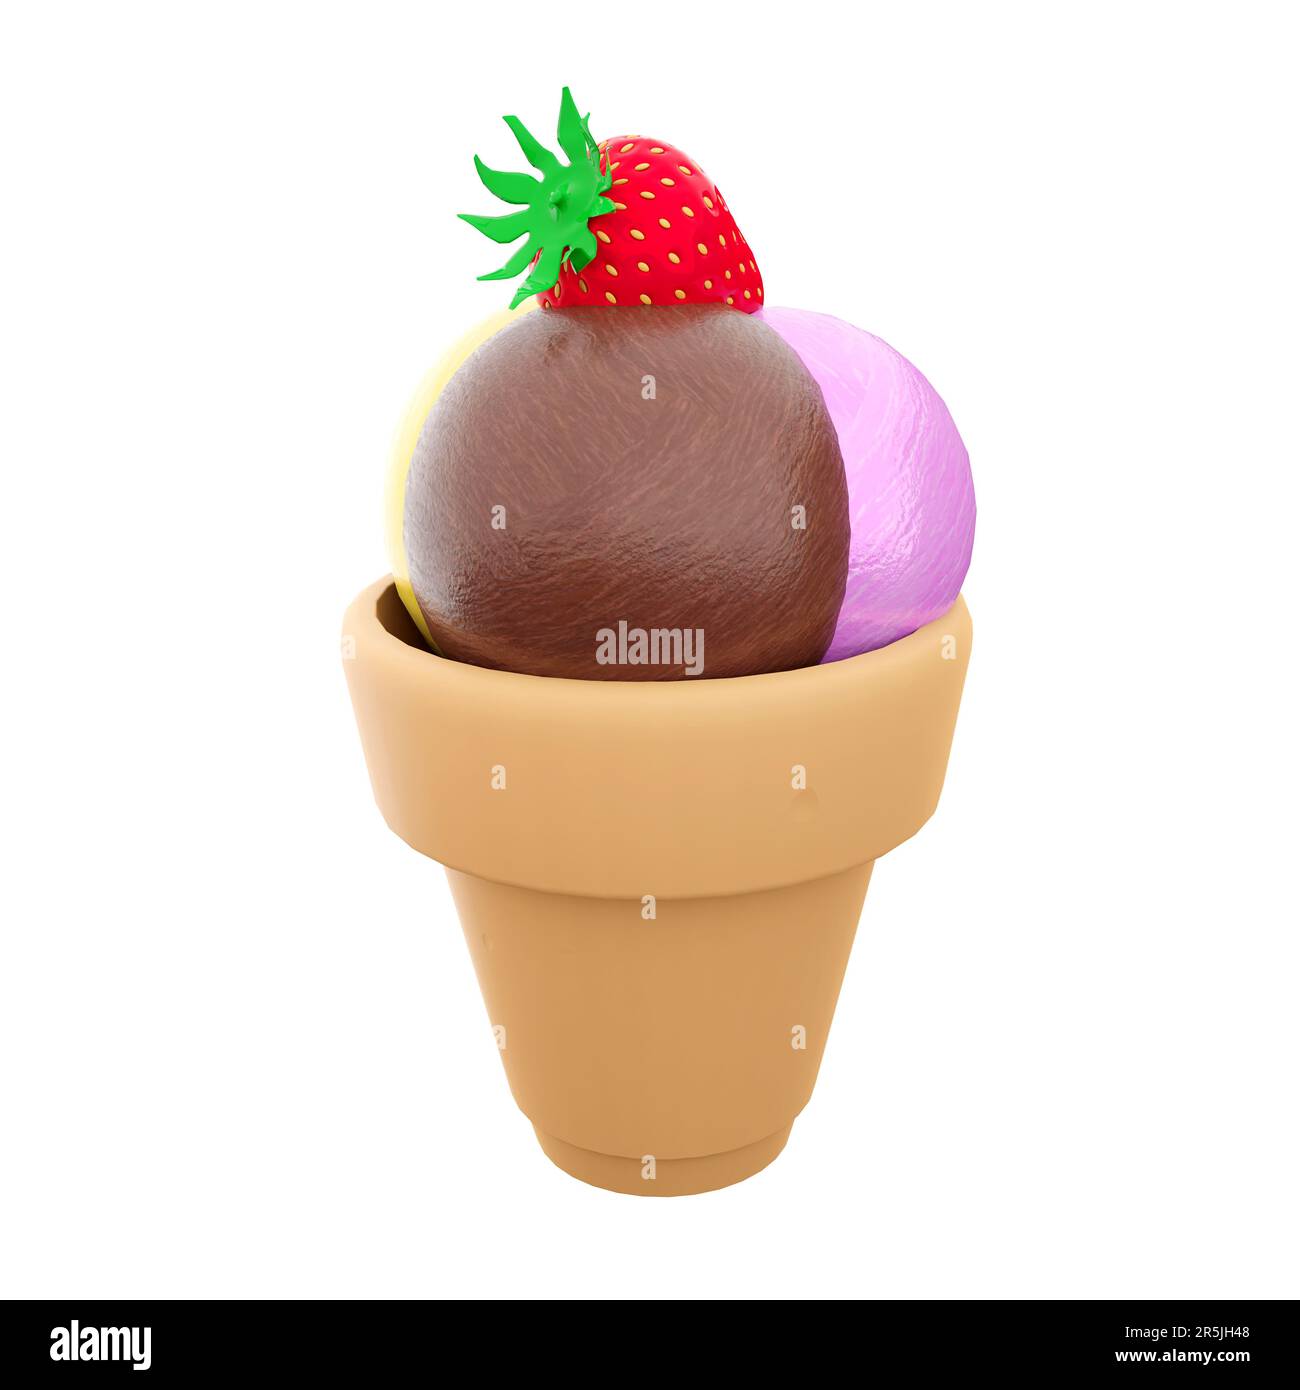 Ice Cream Balls 3D model